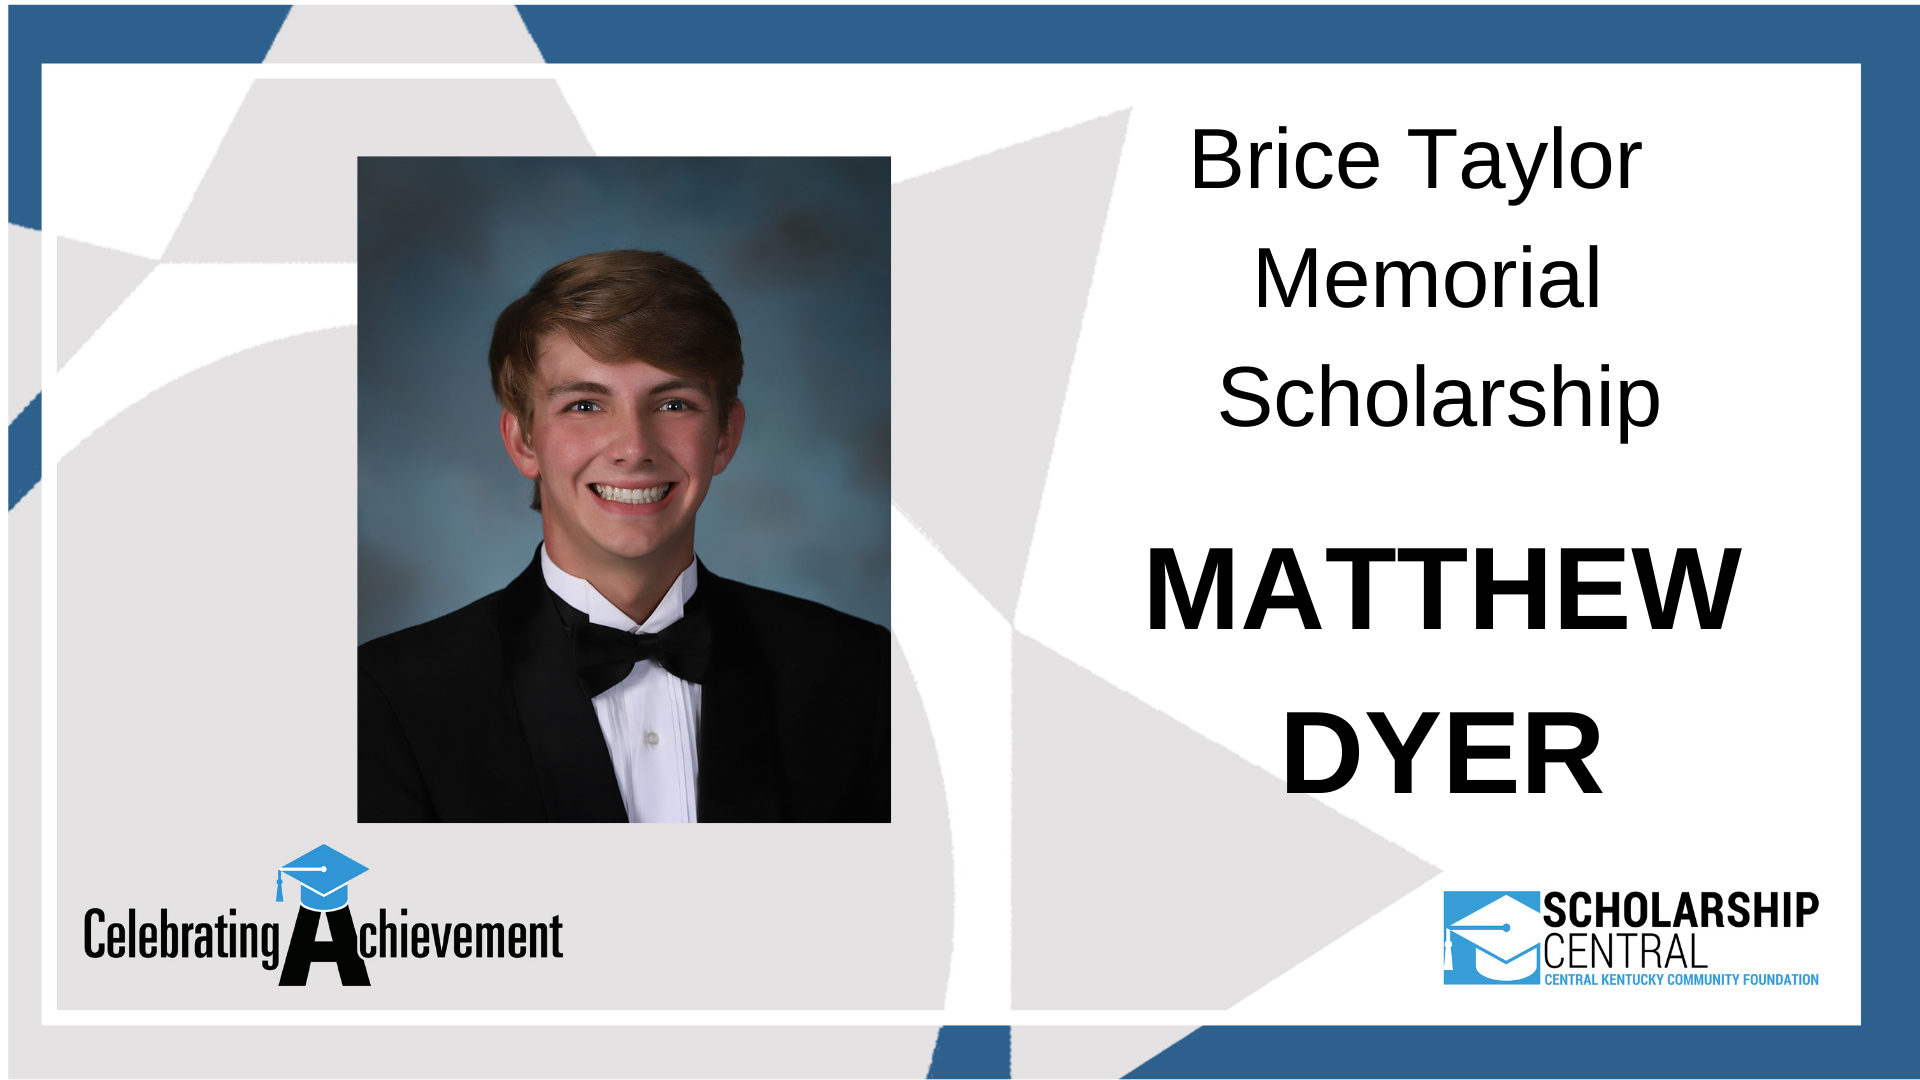 BriceTaylor Memorial Scholarship